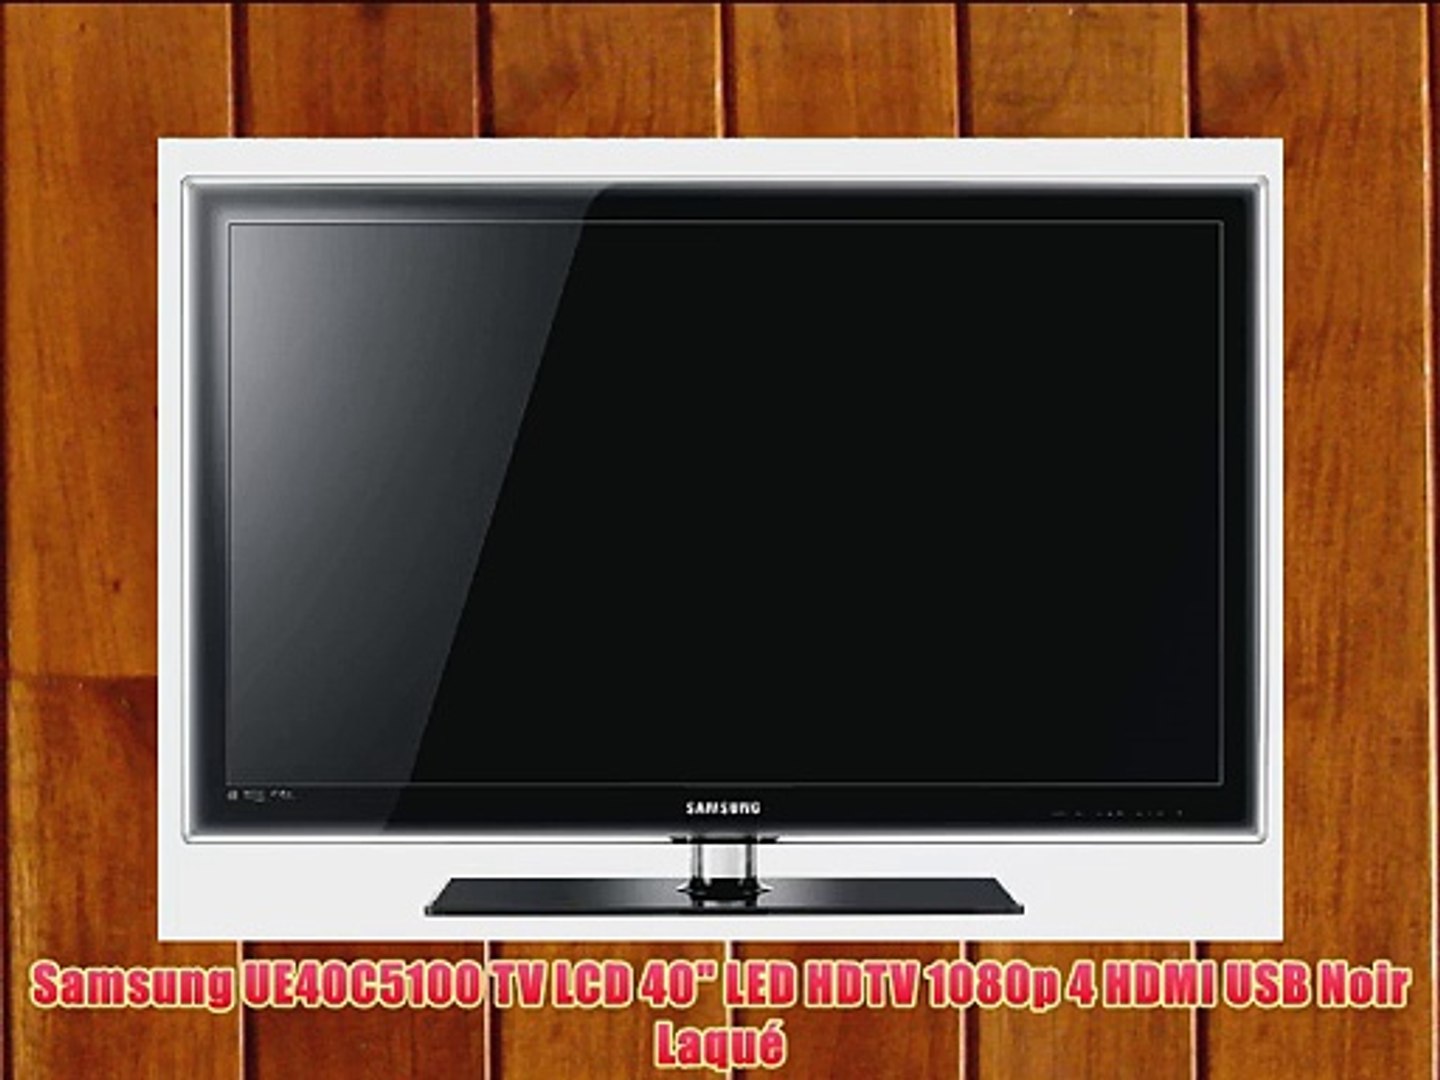 Samsung UE40C5100 TV LCD 40 LED HDTV 1080p 4 HDMI USB Noir Laqu? - video  Dailymotion